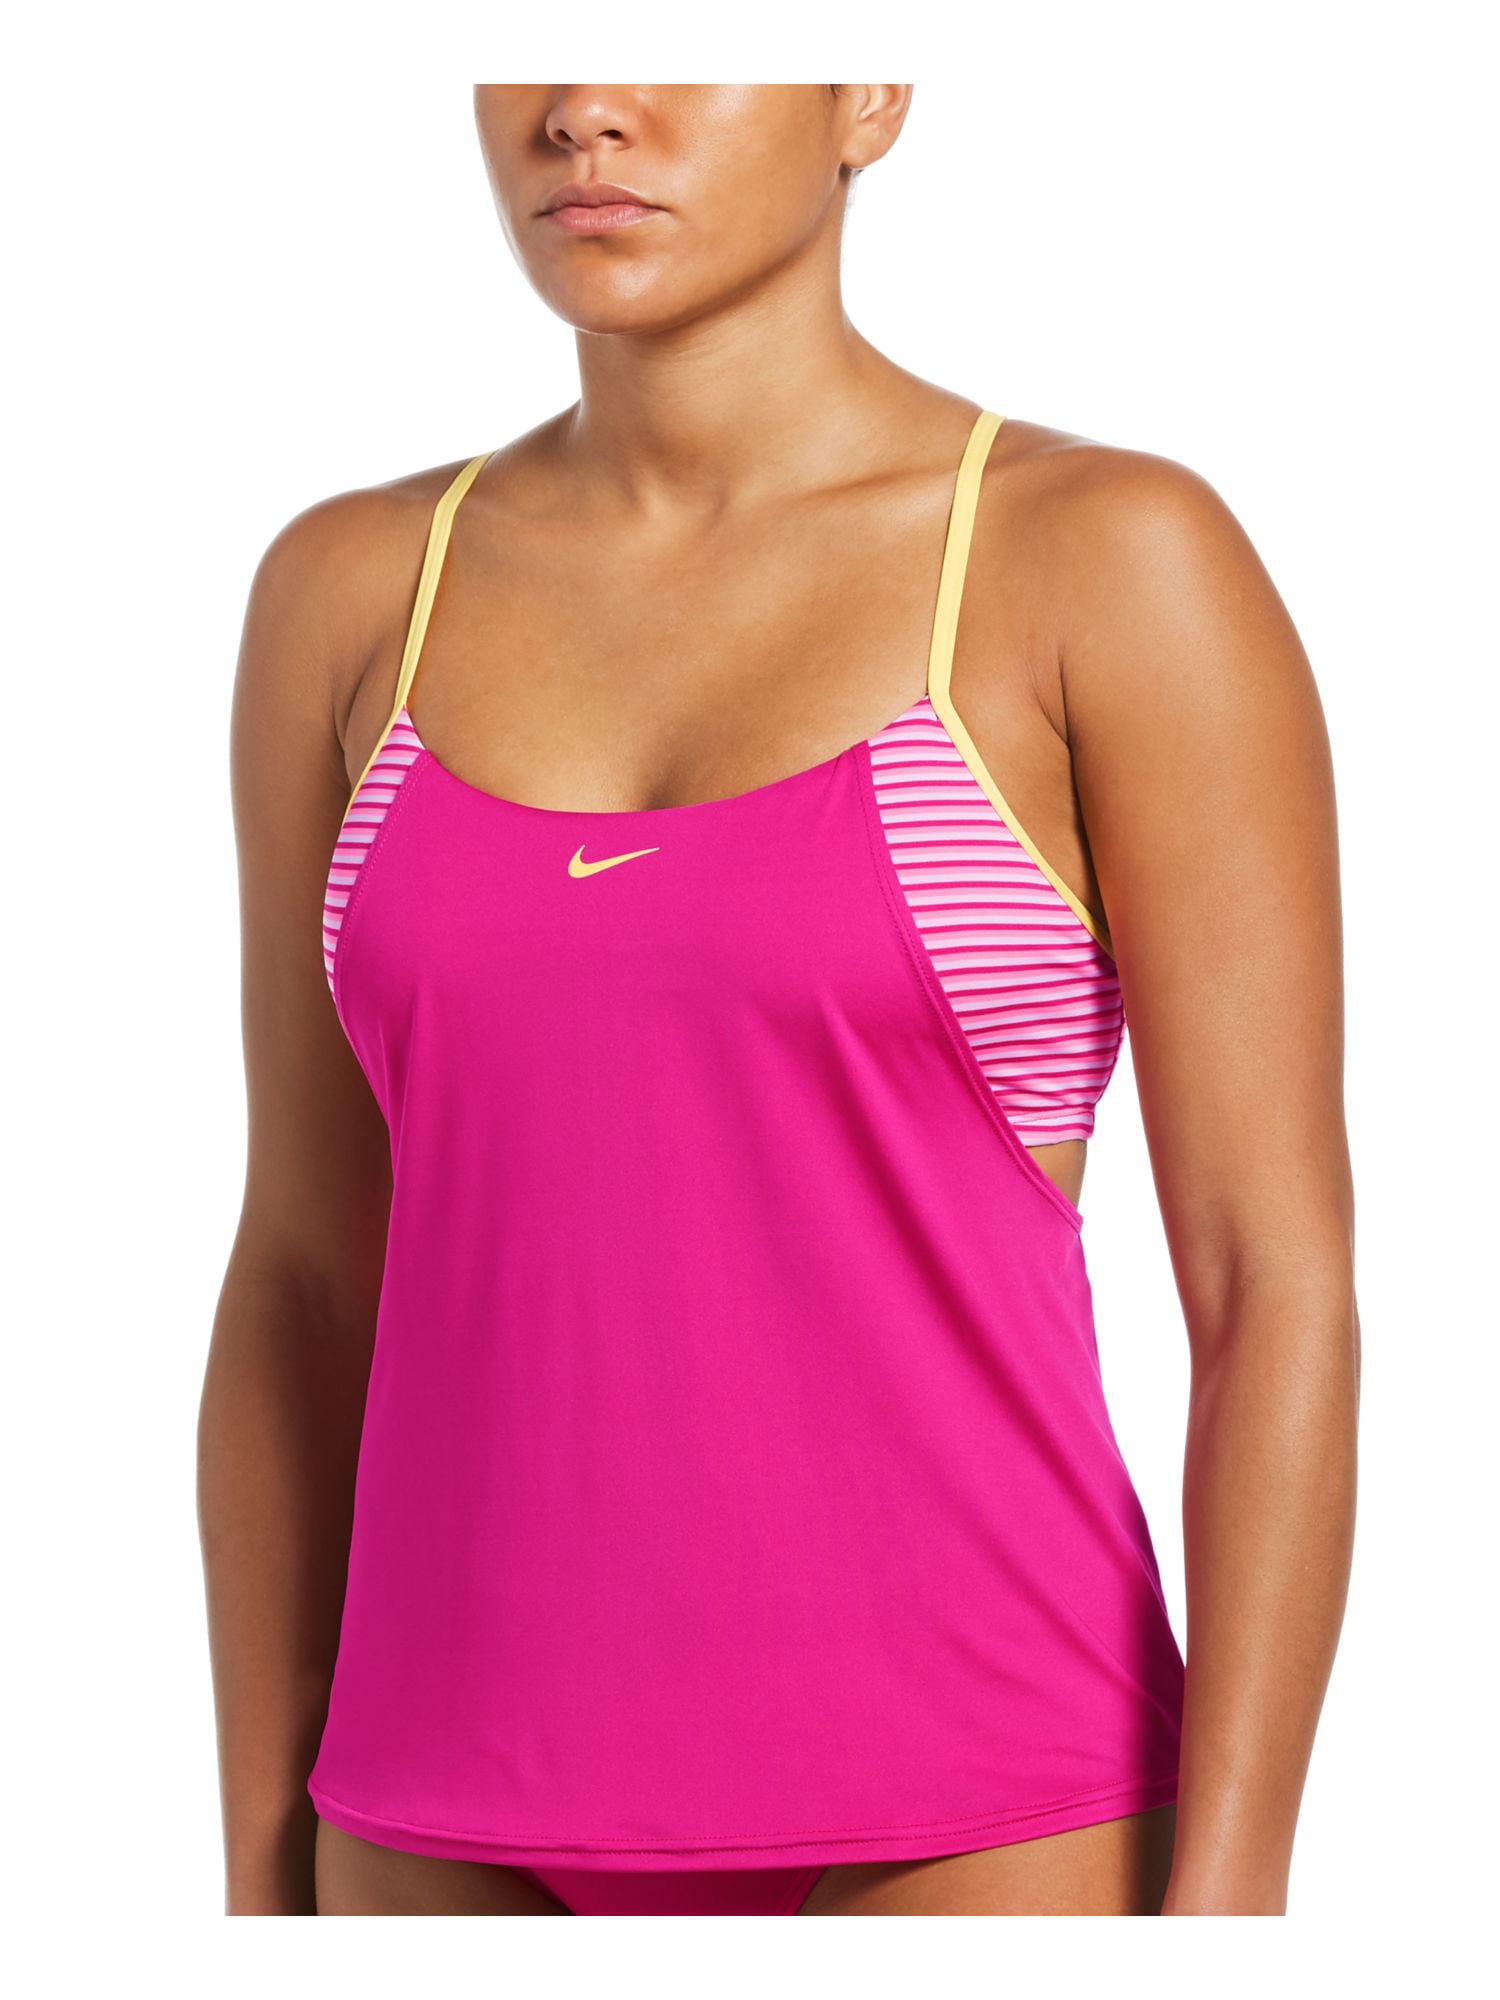 NIKE Women's Pink Striped Stretch Scoop Neck Racerback Layered Swimsuit Top M - Walmart.com